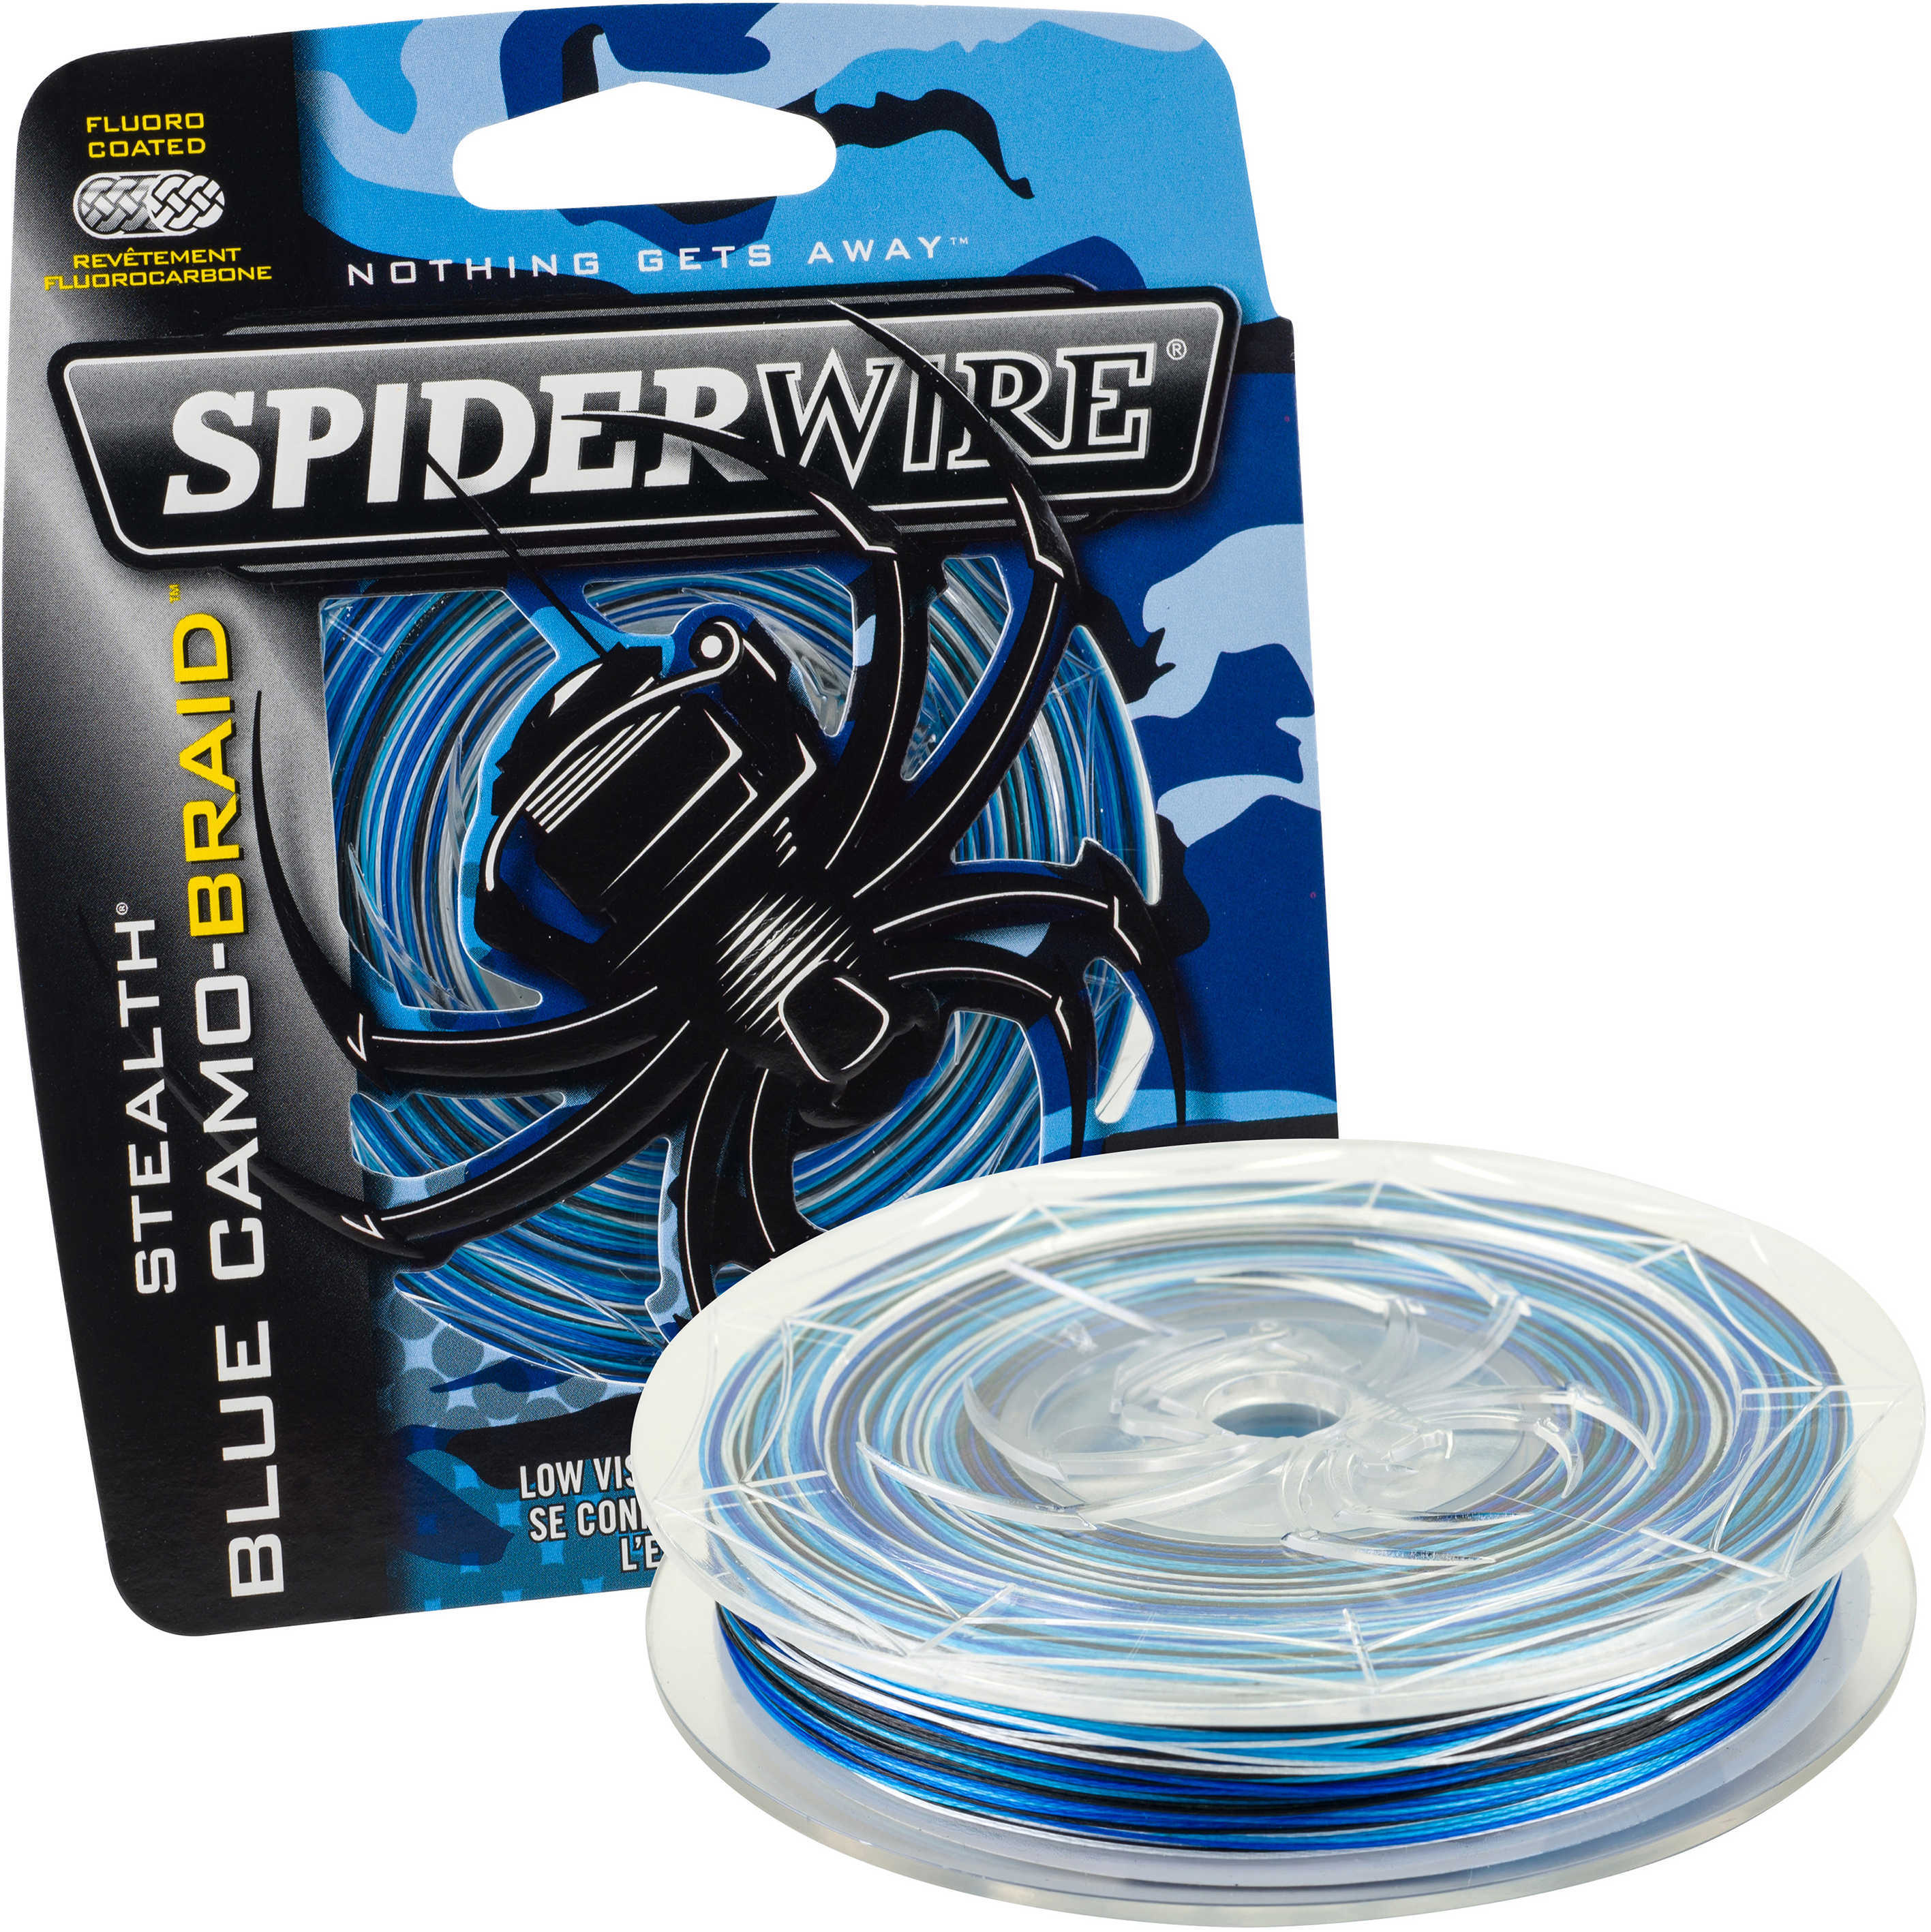 Spiderwire Stealth Braid 300 Yards , 50 lbs Strength, 0.014" Diameter, Blue Camo Md: 1370449